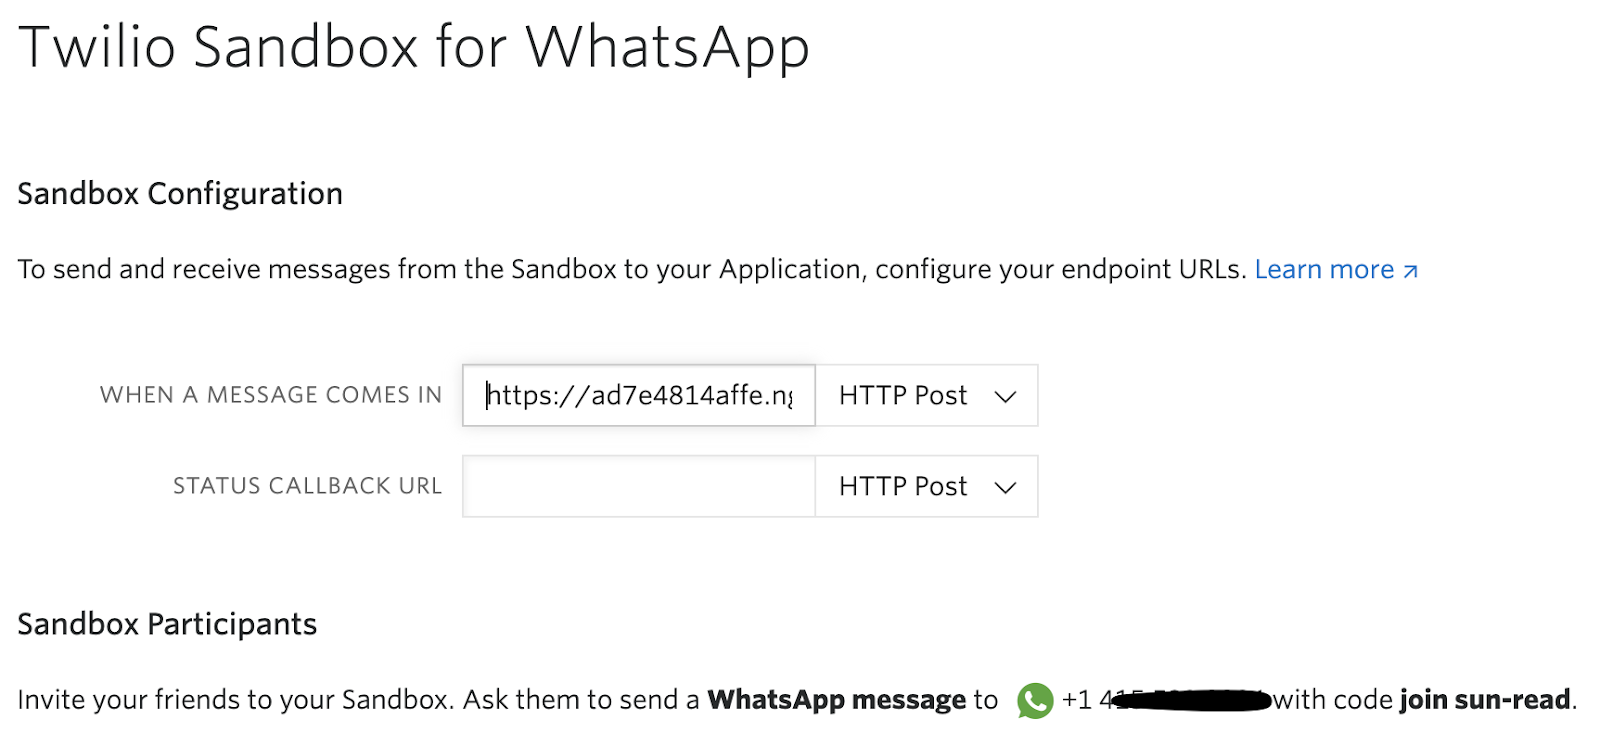 Twilio Sandbox for WhatsApp with webhook in text field